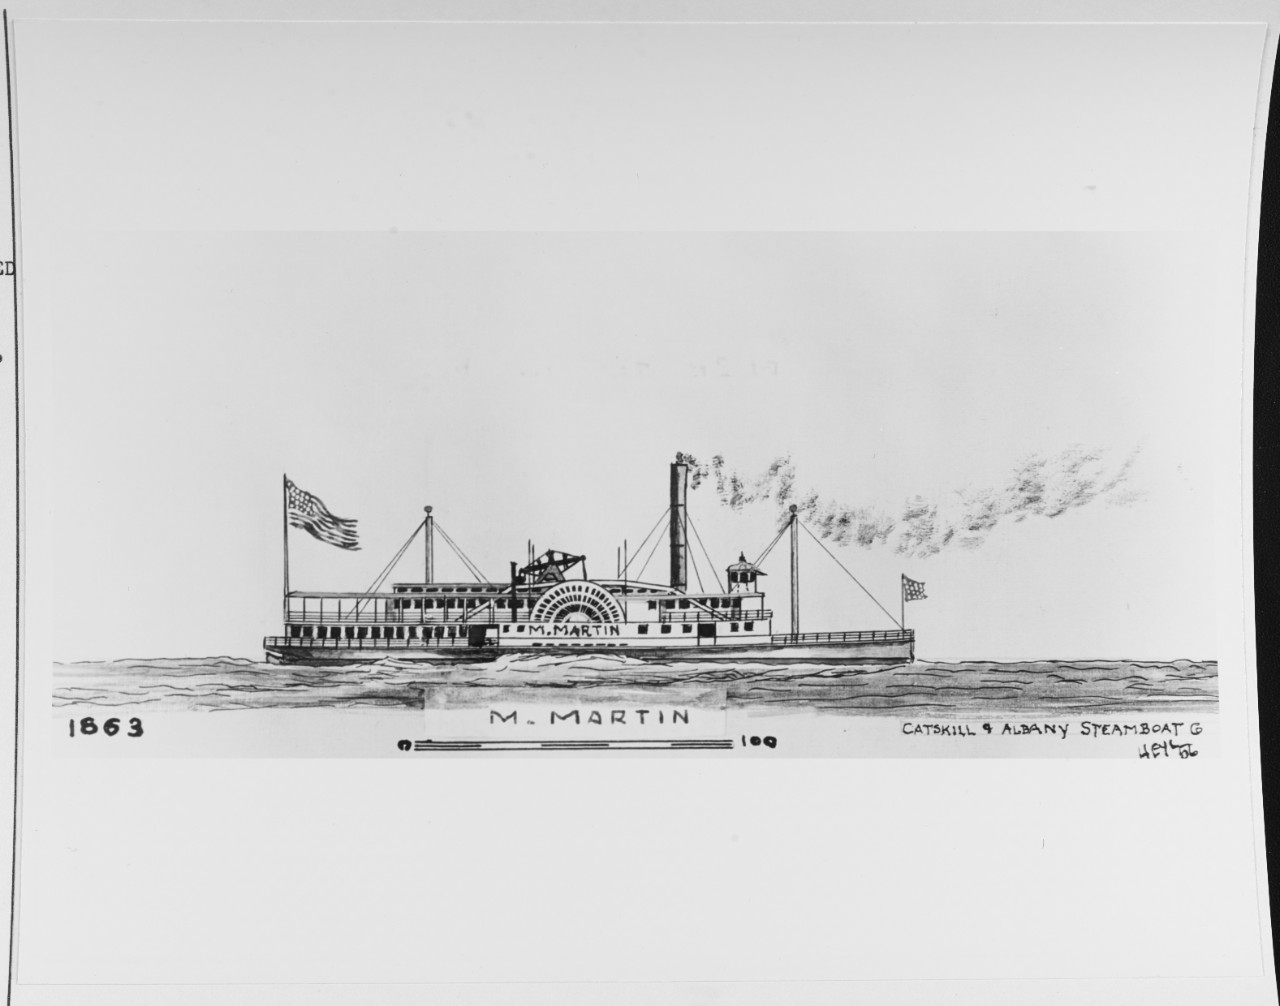 M. MARTIN (American merchant steamer, 1864-1920)